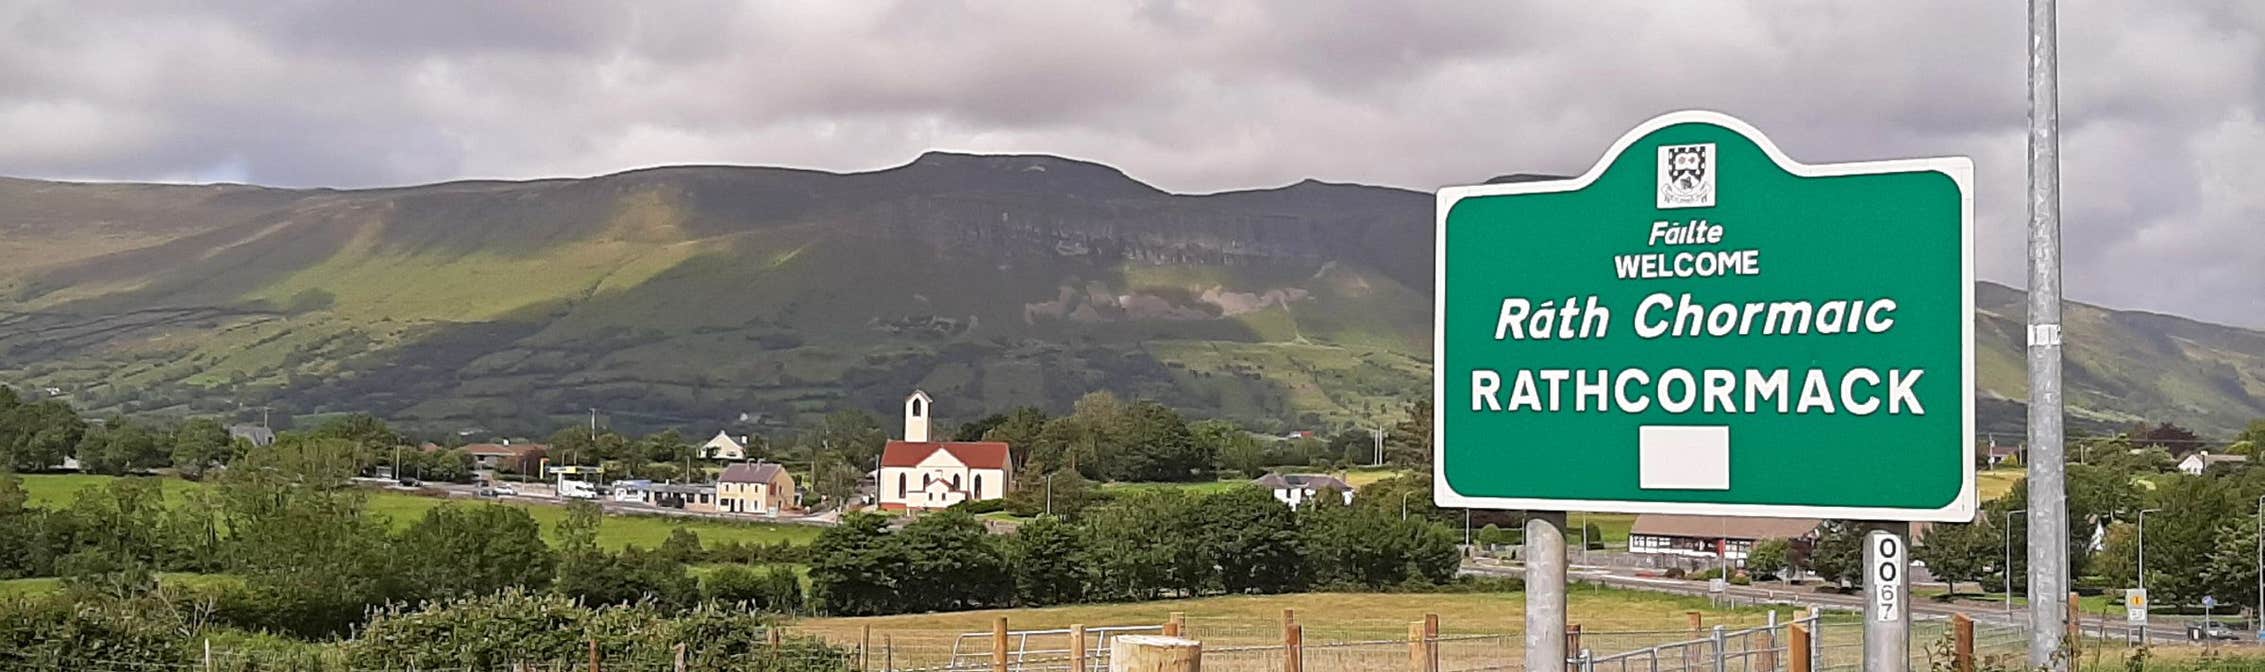 Image of Rathcormack in County Sligo